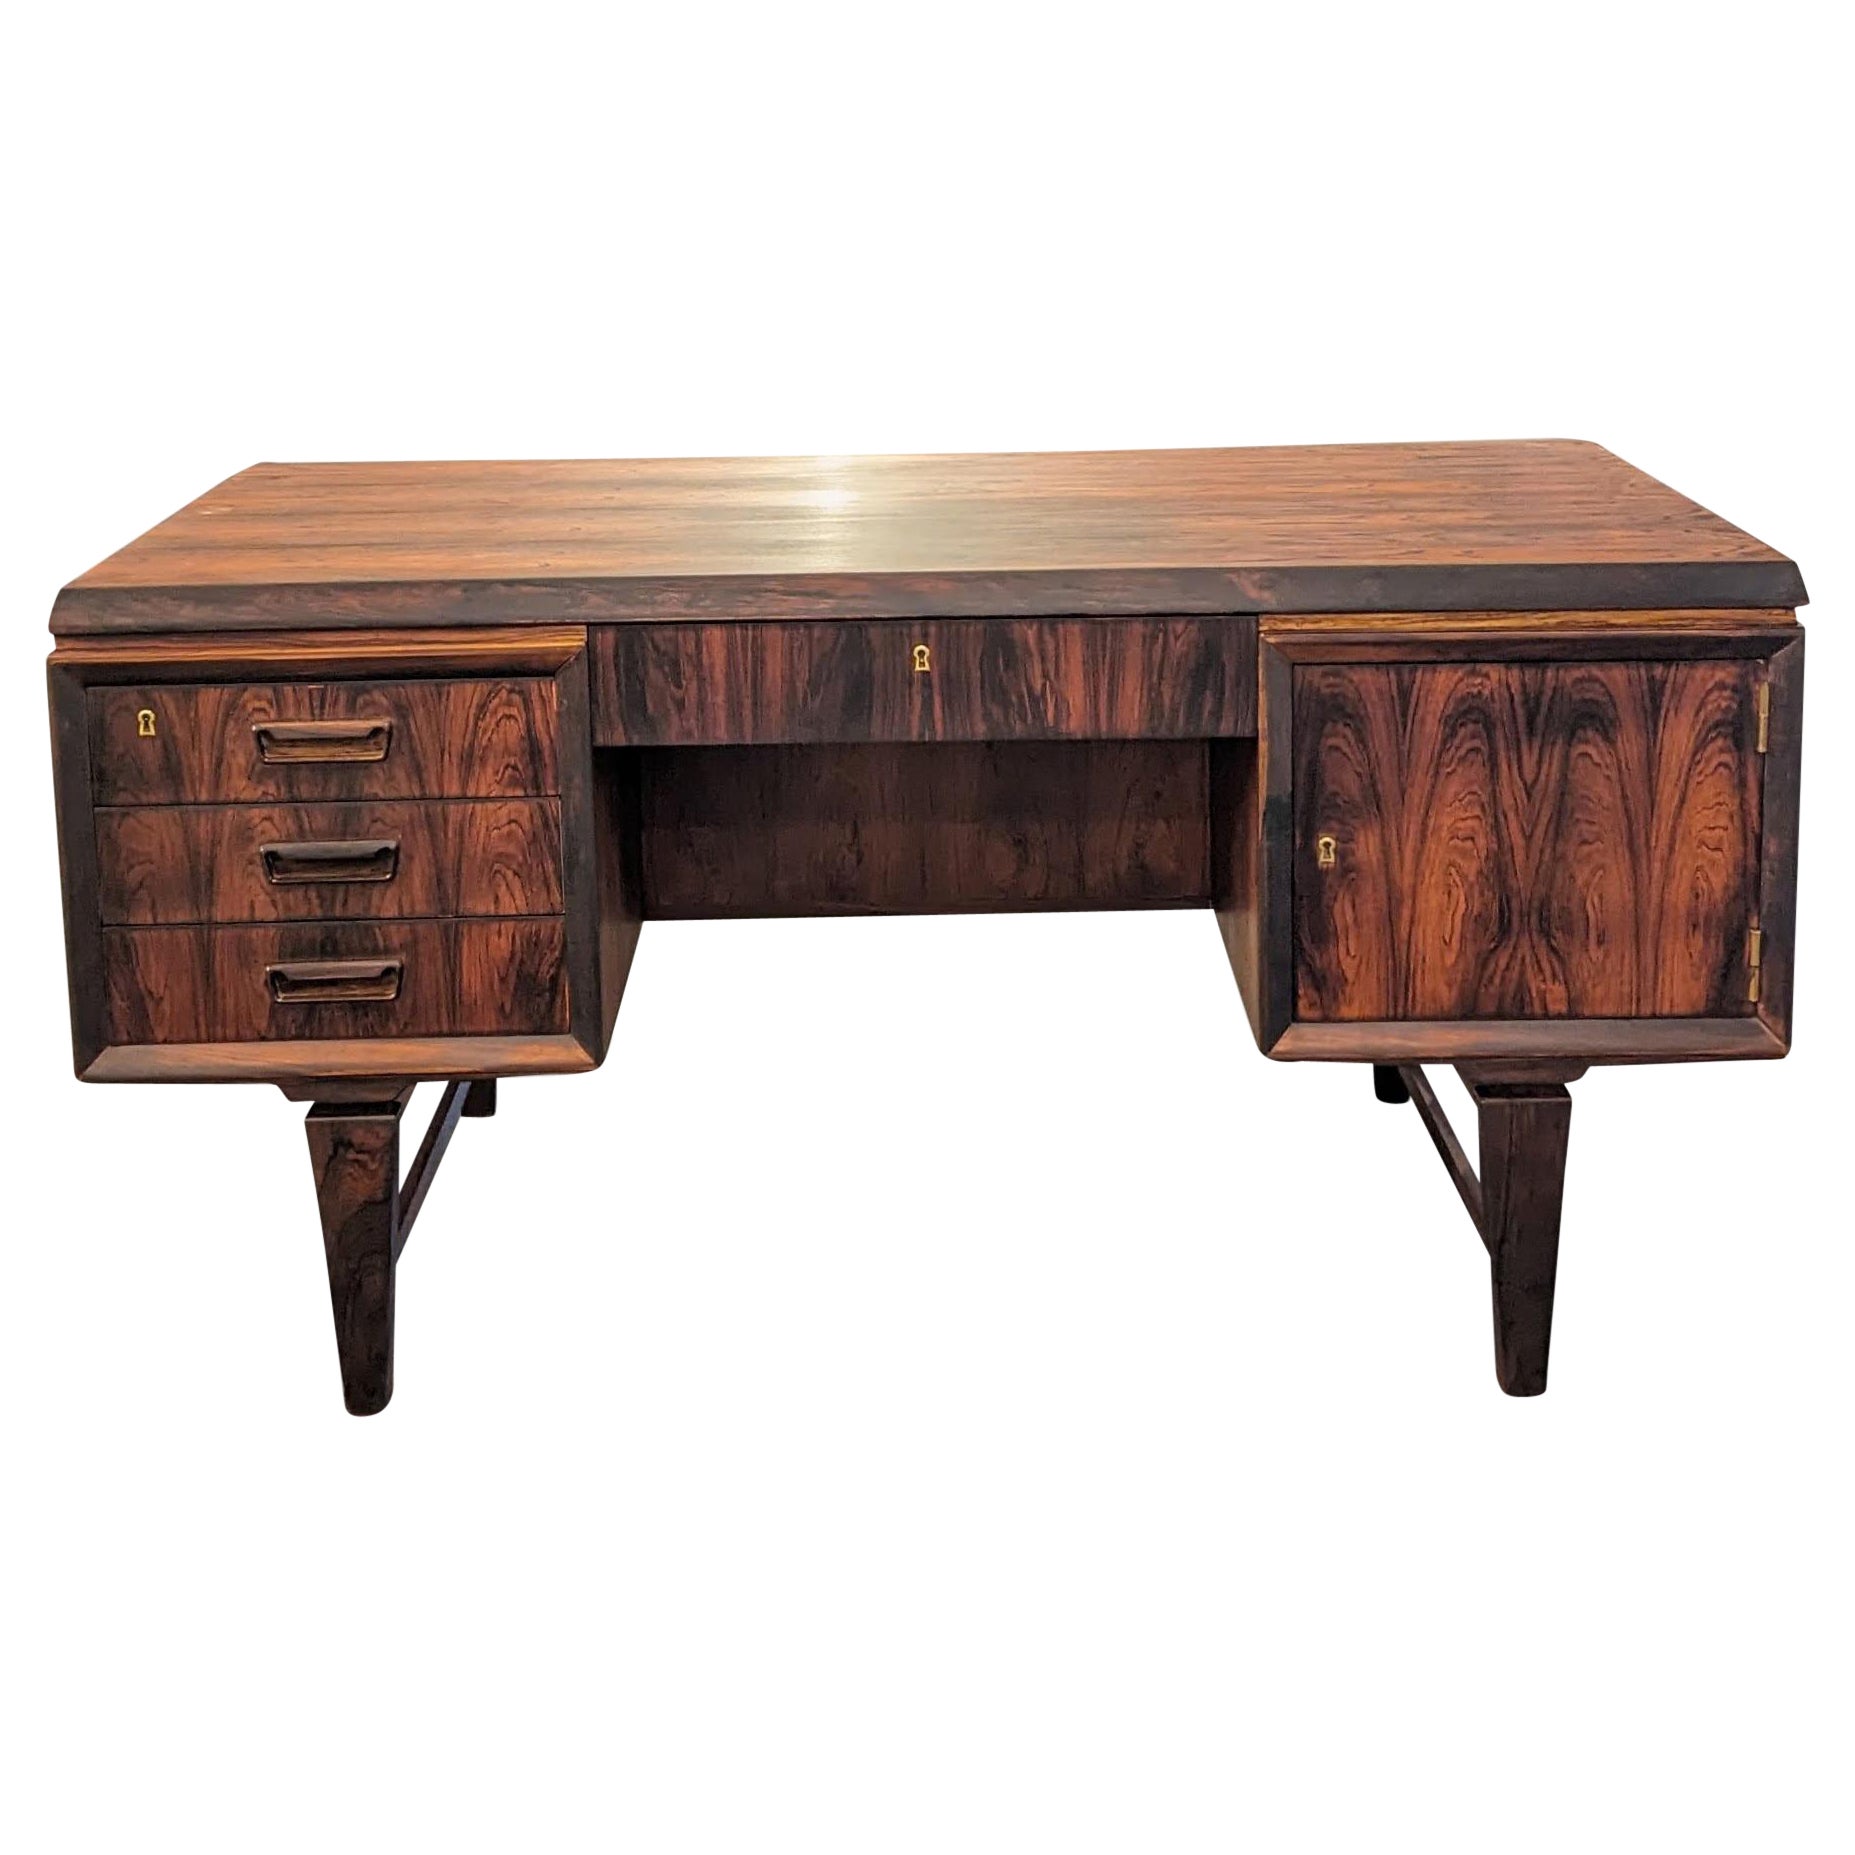 Vintage Danish Mid Century Large Rosewood Desk - 072315